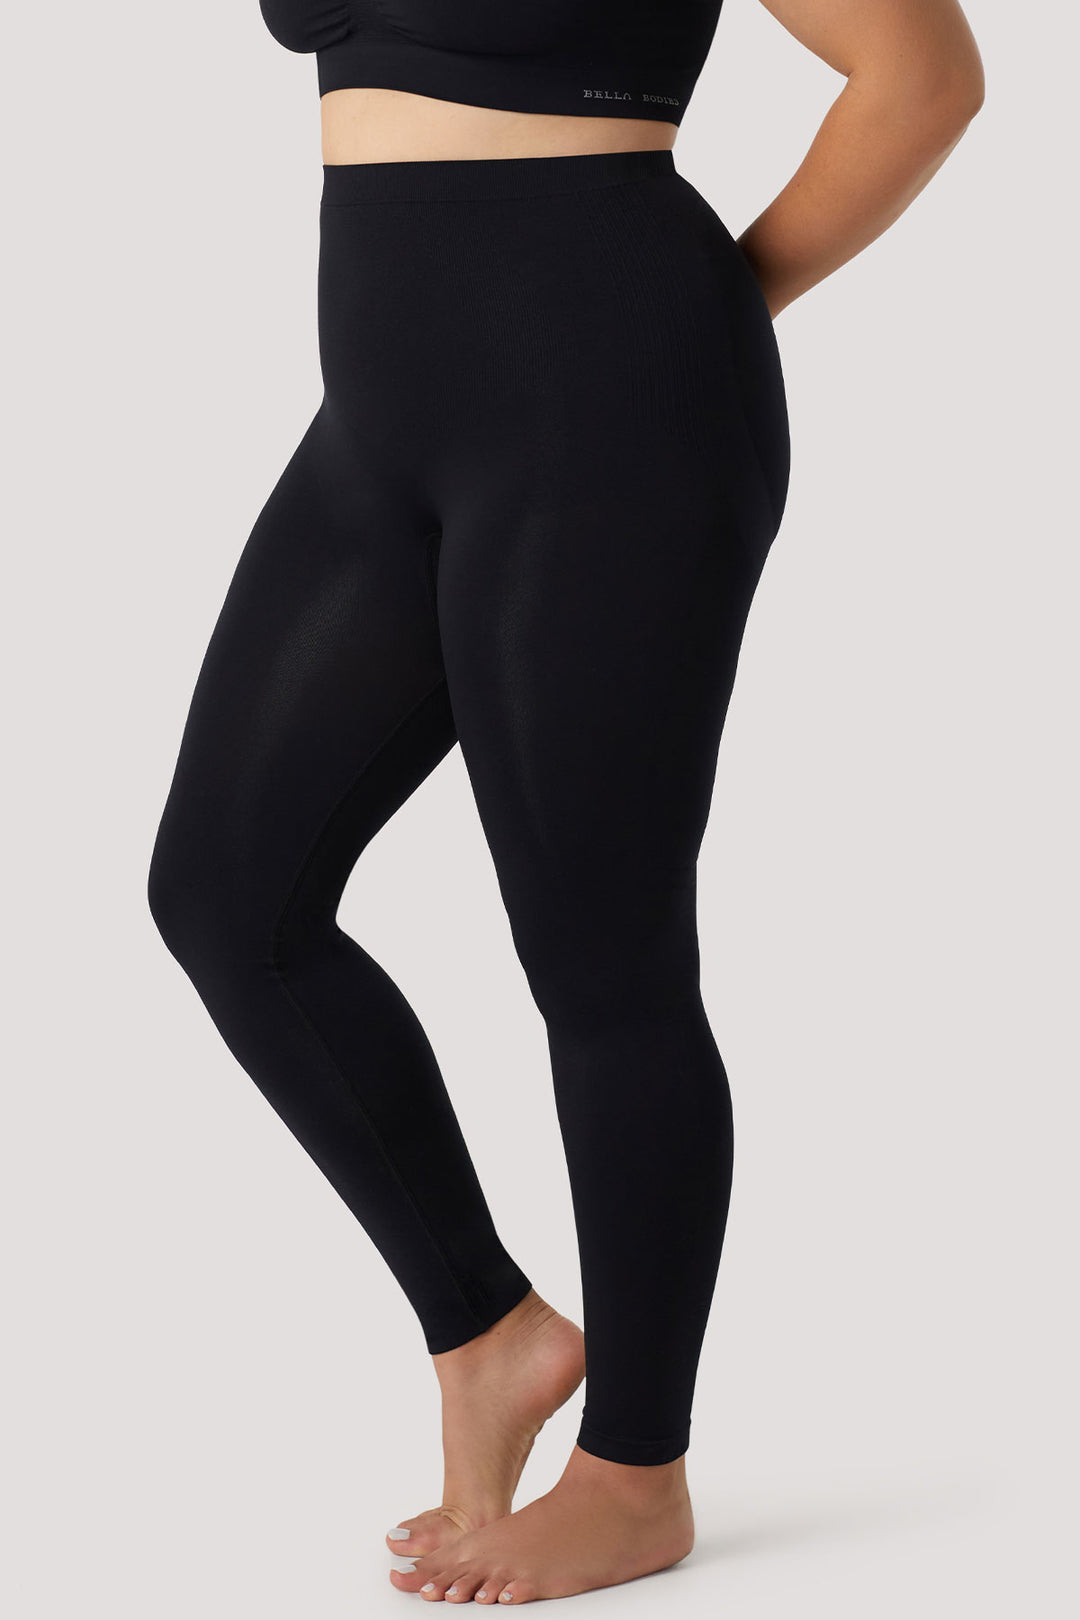 Shop Navy Black Seamless leggings Pack of 2